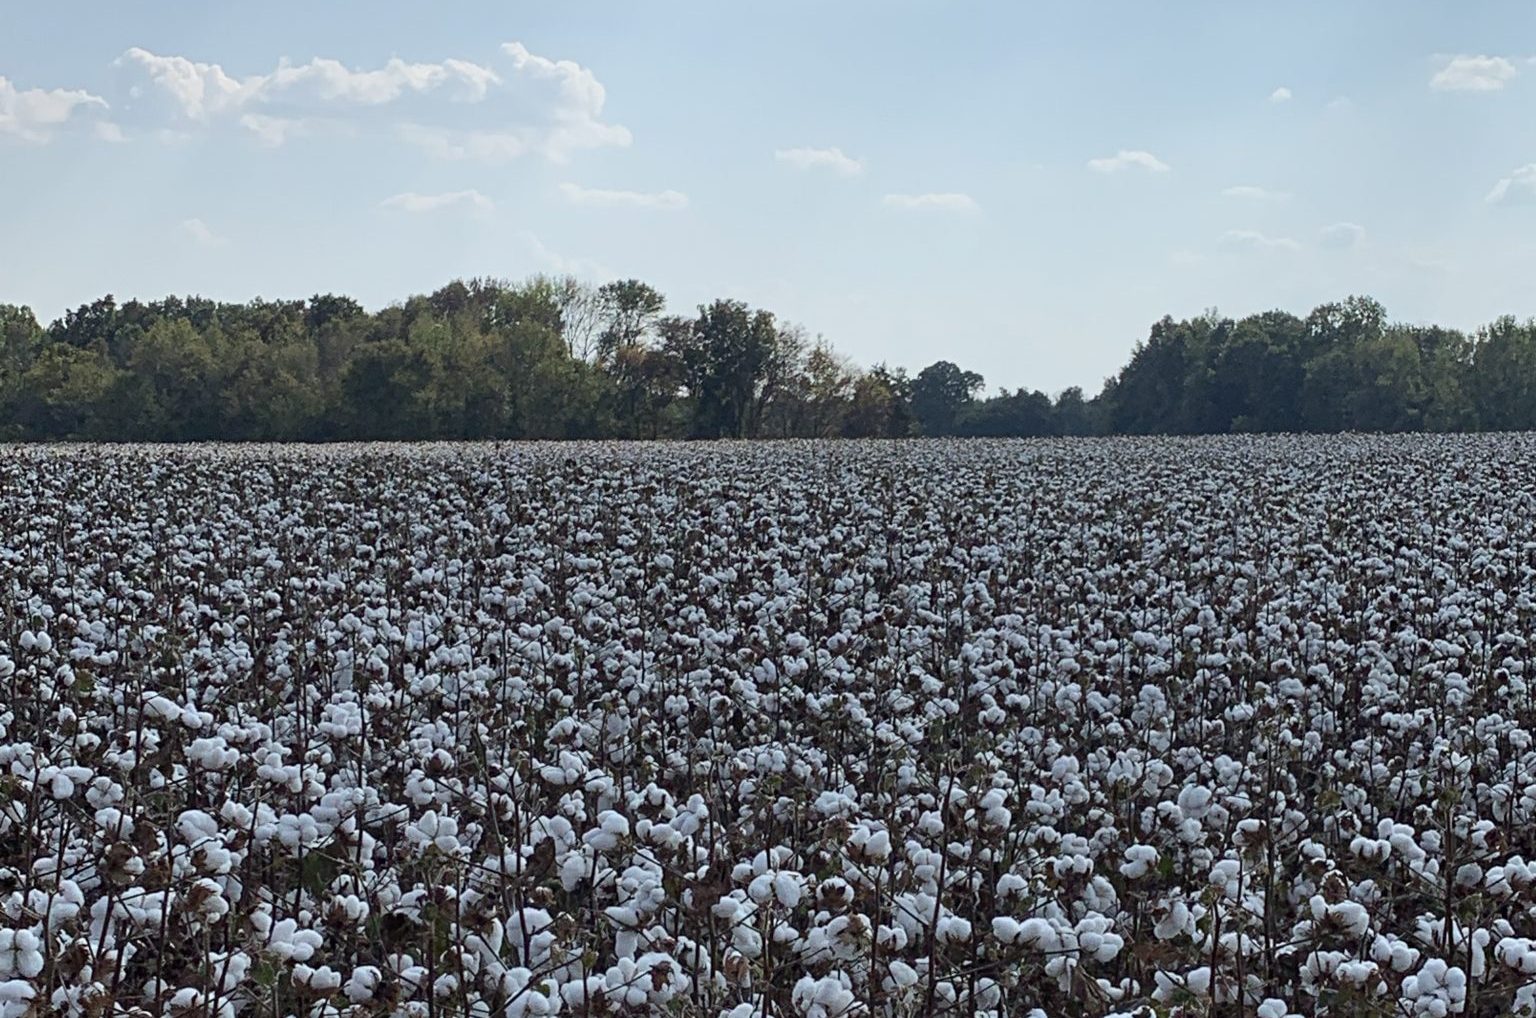 Application of Cotton Defoliation Aids in Alabama - Alabama